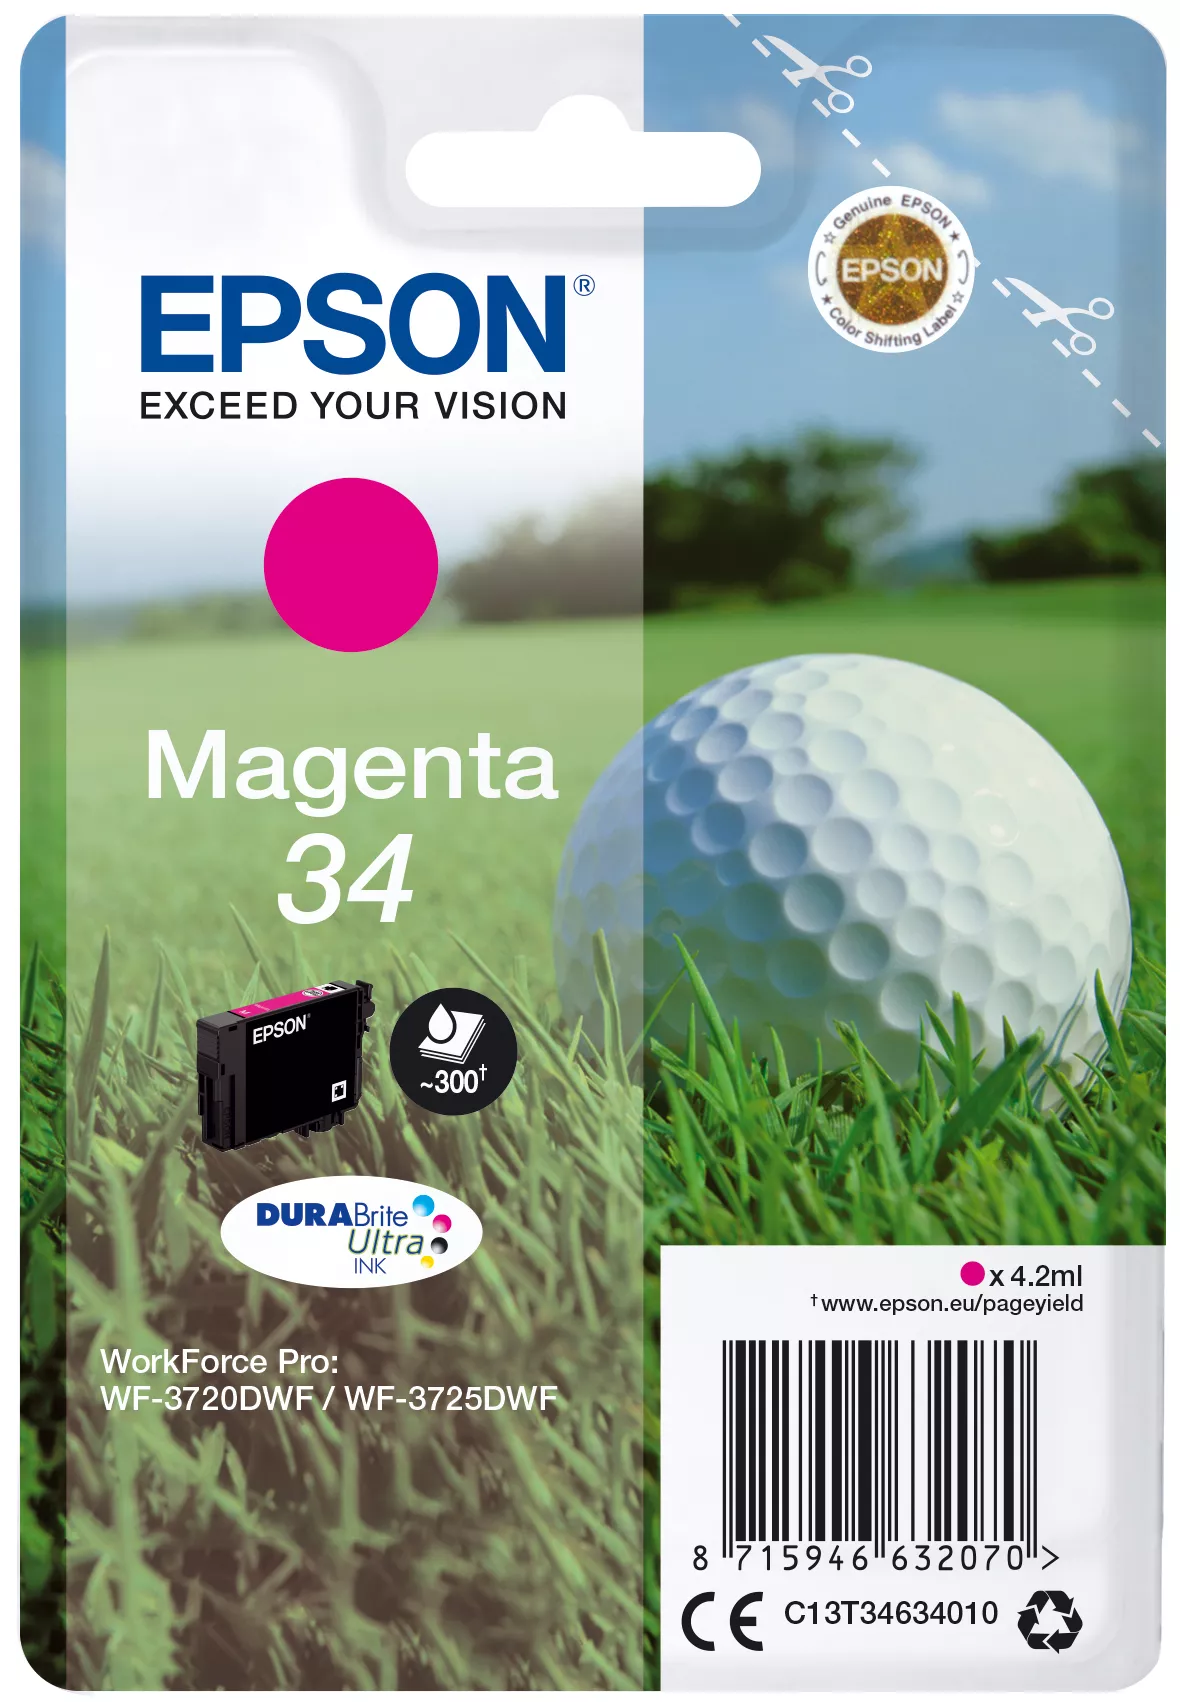 Achat EPSON Singlepack Magenta 34 - DURABrite Ultra Encre au meilleur prix